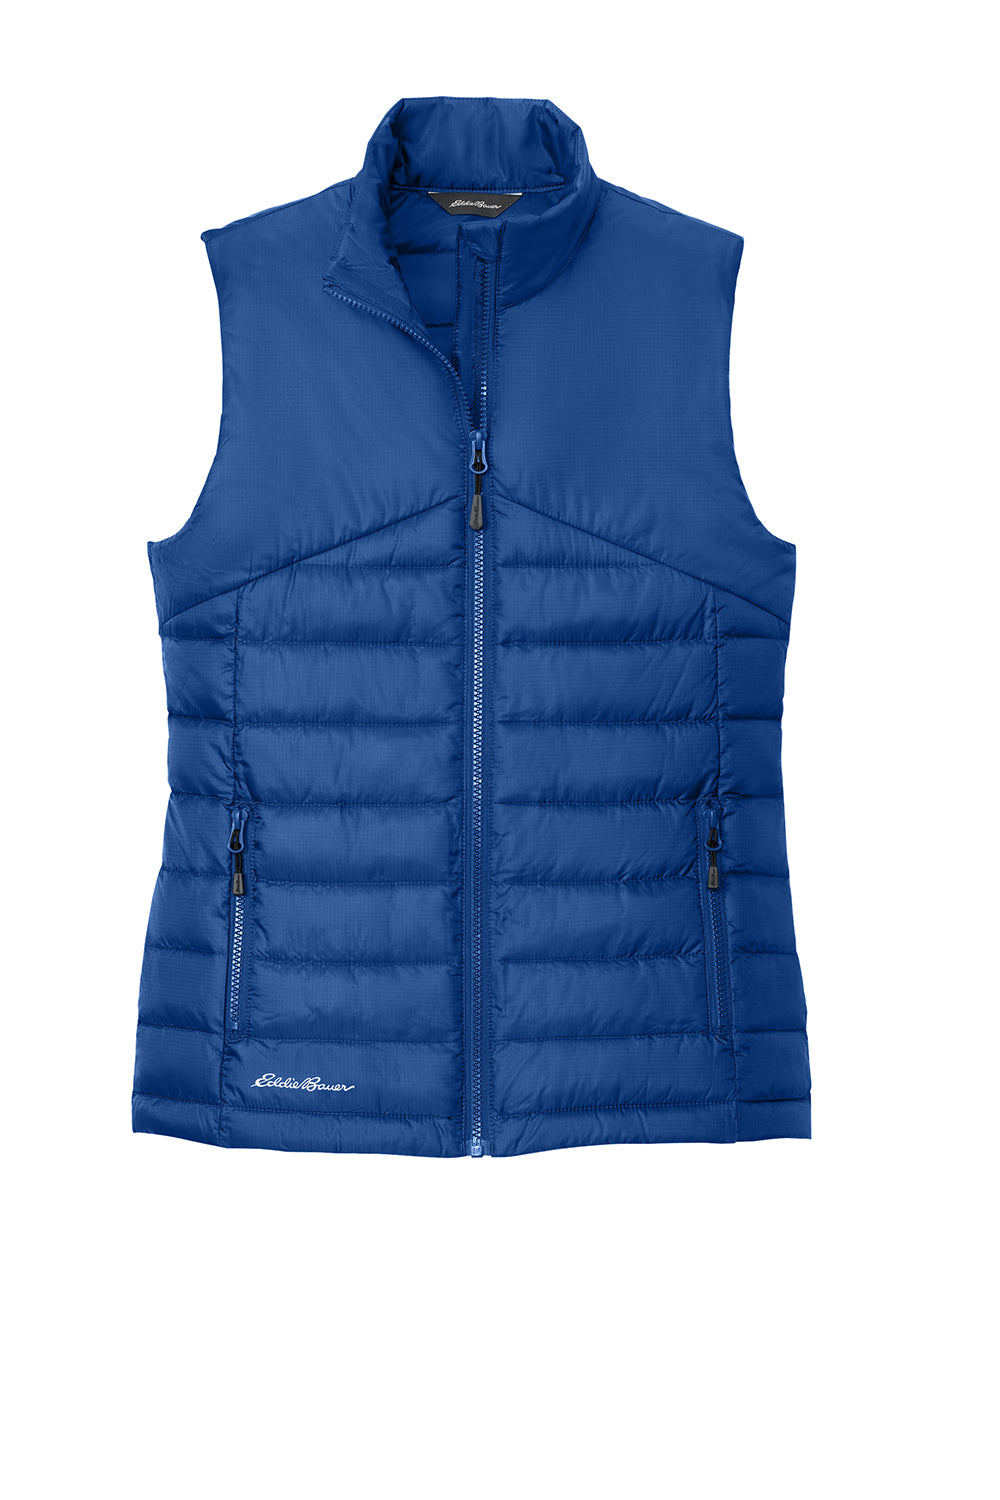 Eddie Bauer EB513 Womens Water Resistant Quilted Full Zip Vest Cobalt Blue Flat Front